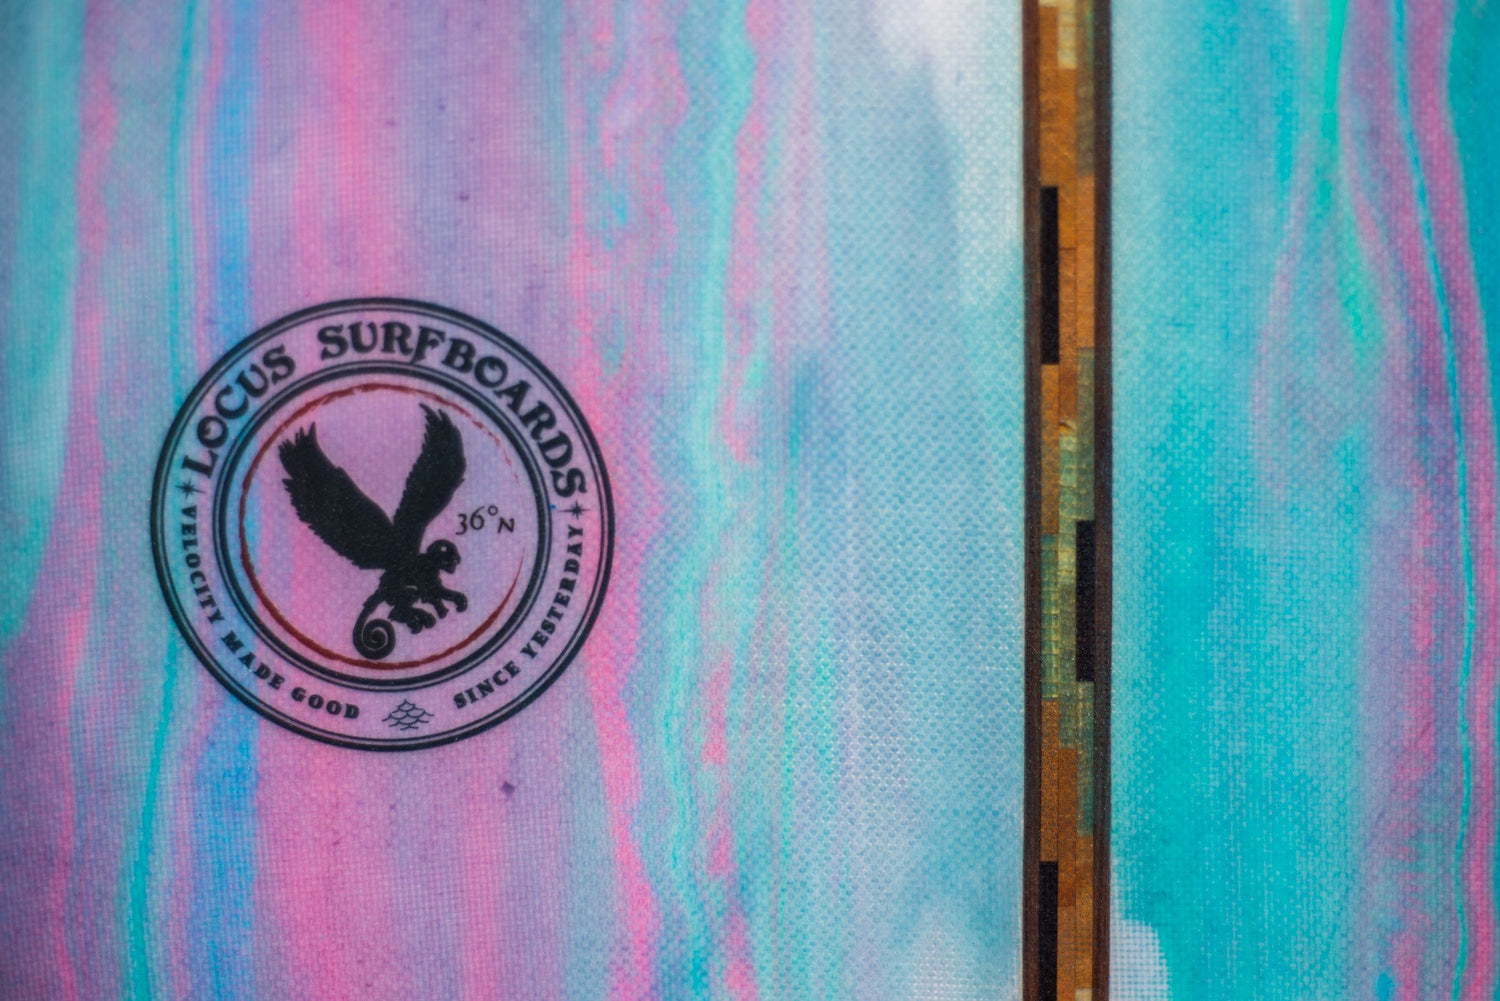 Locus Eco Surfboards - Gibbon 5&